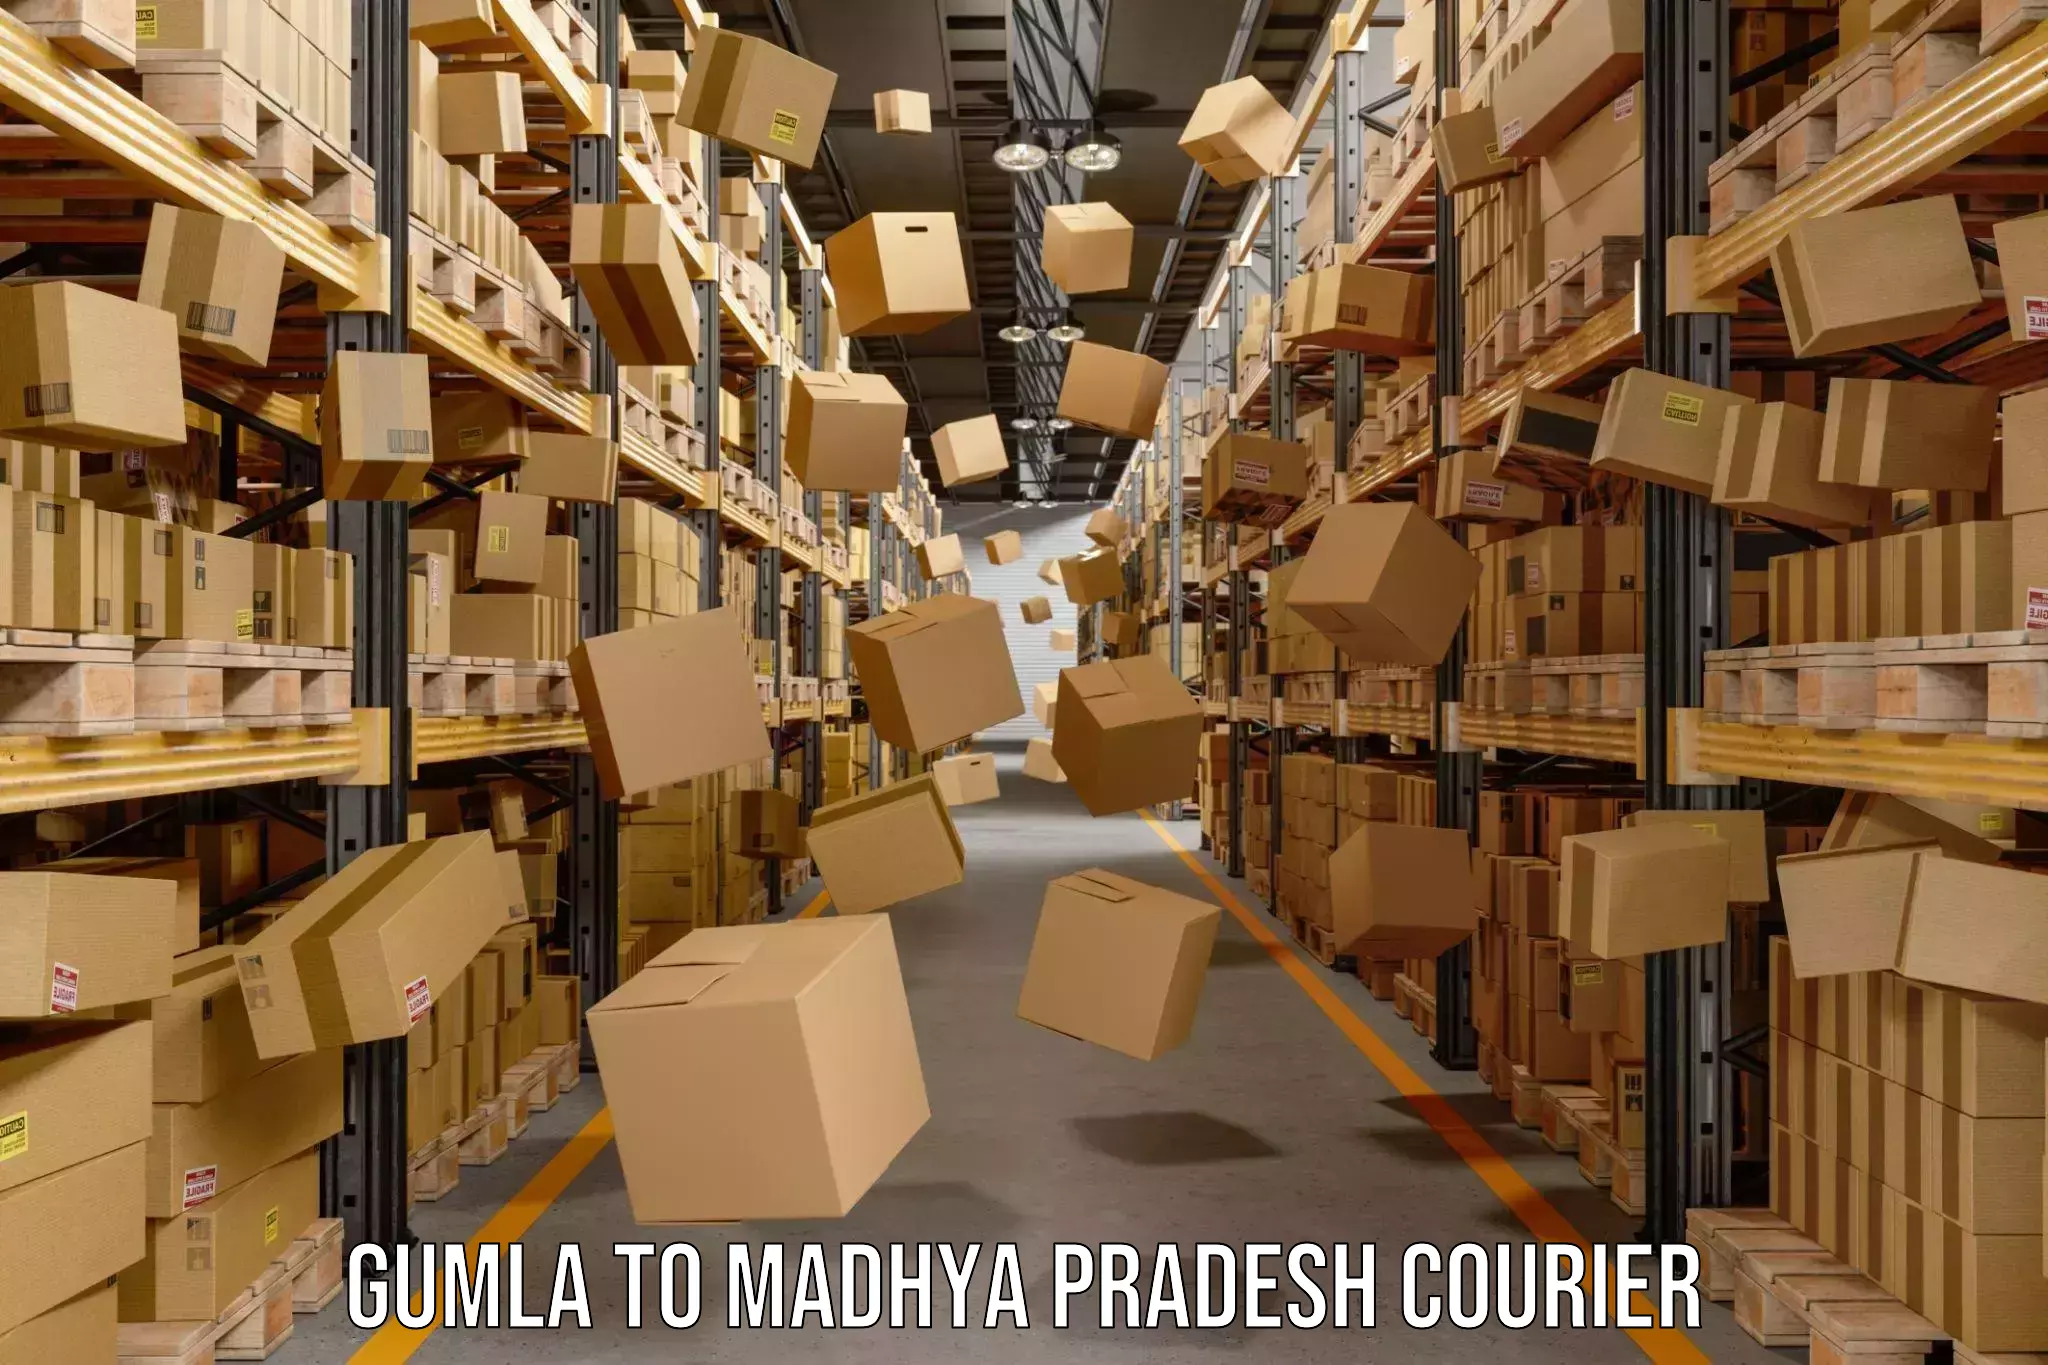 Nationwide courier service Gumla to IIIT Bhopal